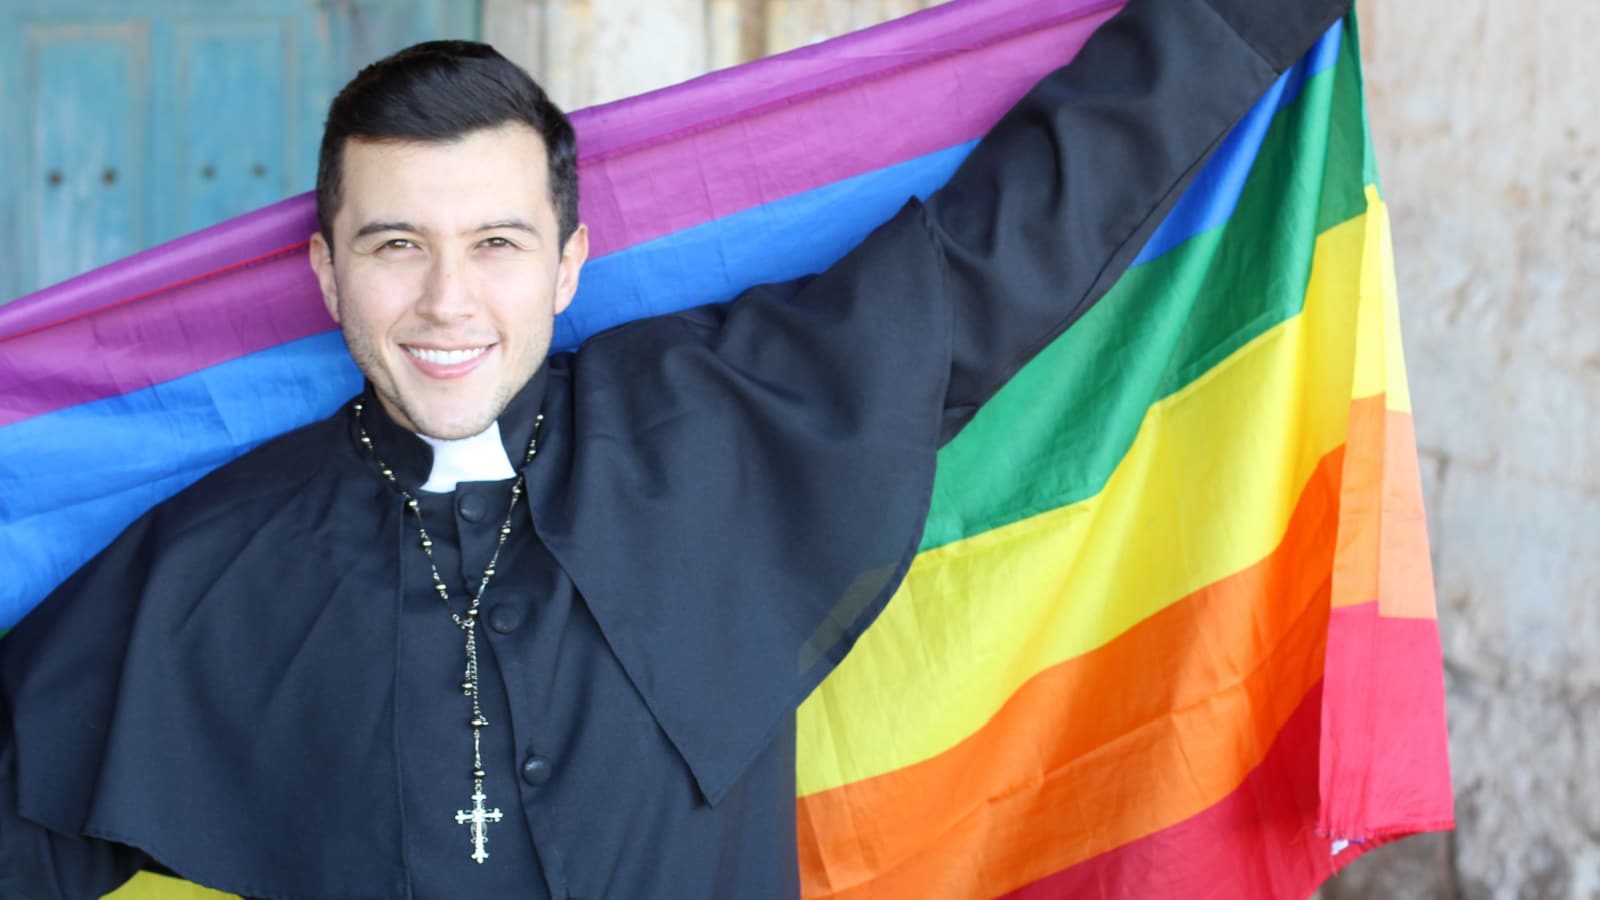 LGBTQ priest rainbow flag